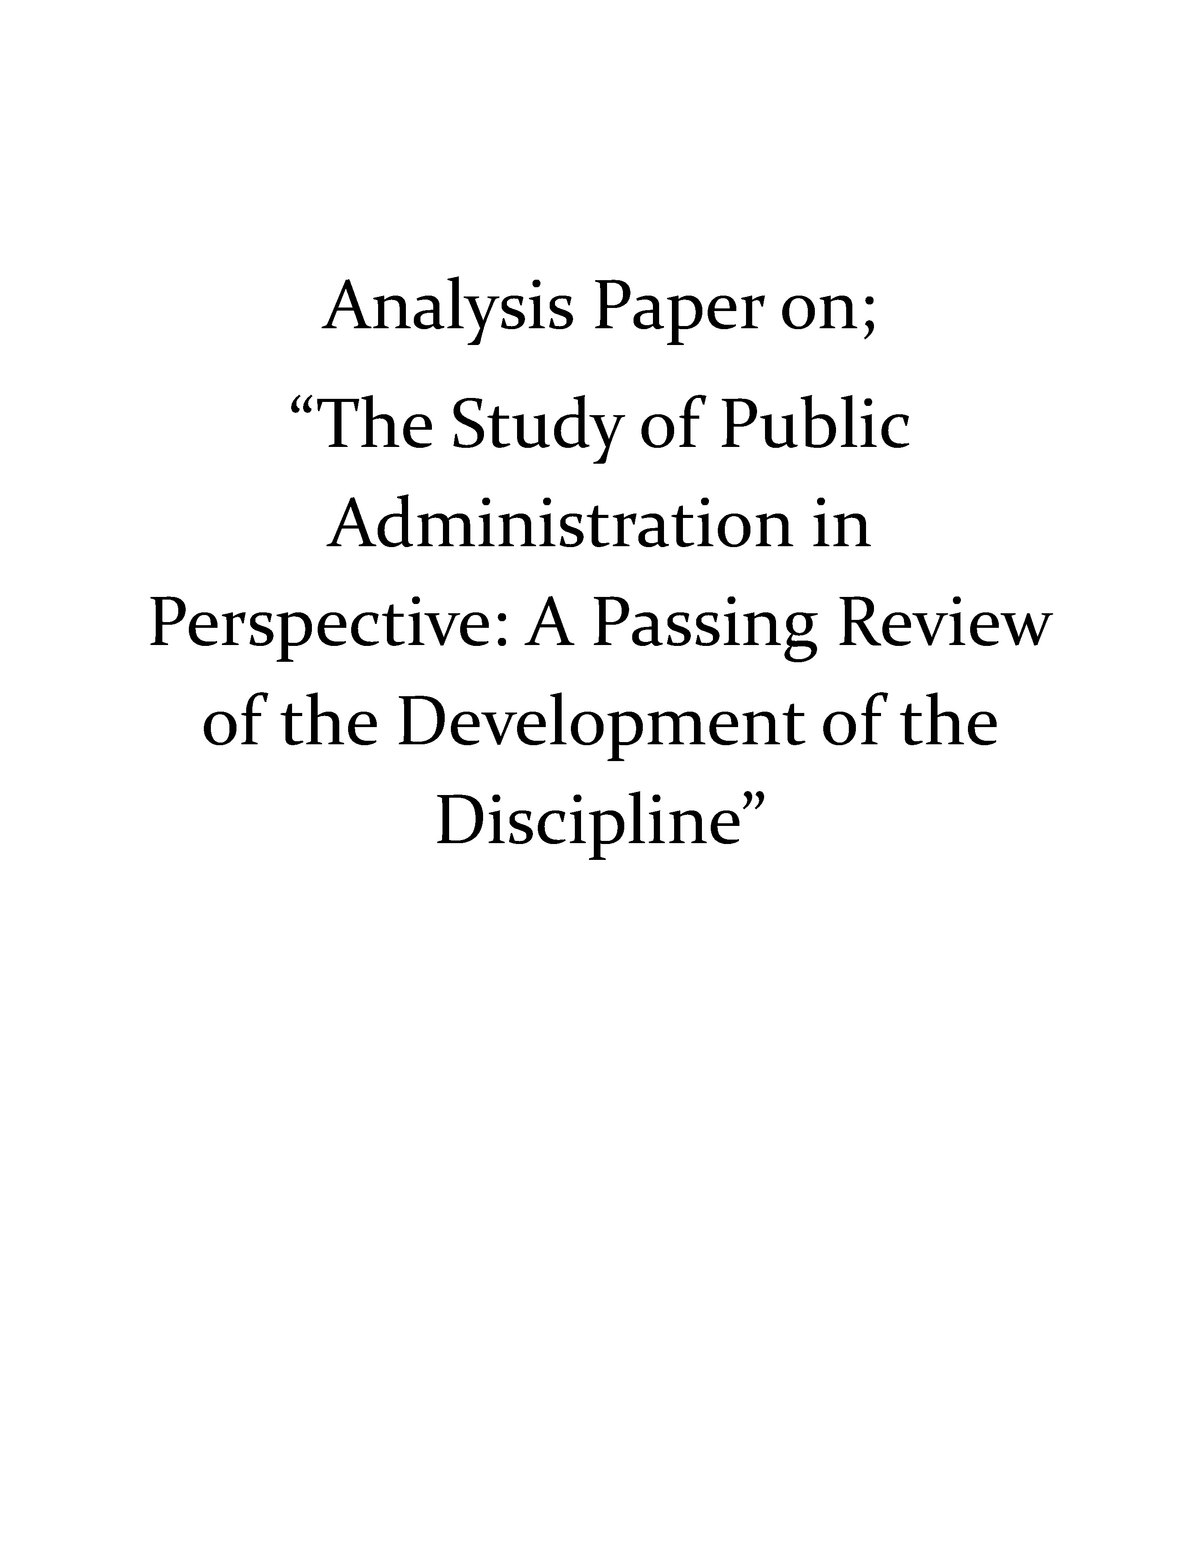 dissertation in public administration